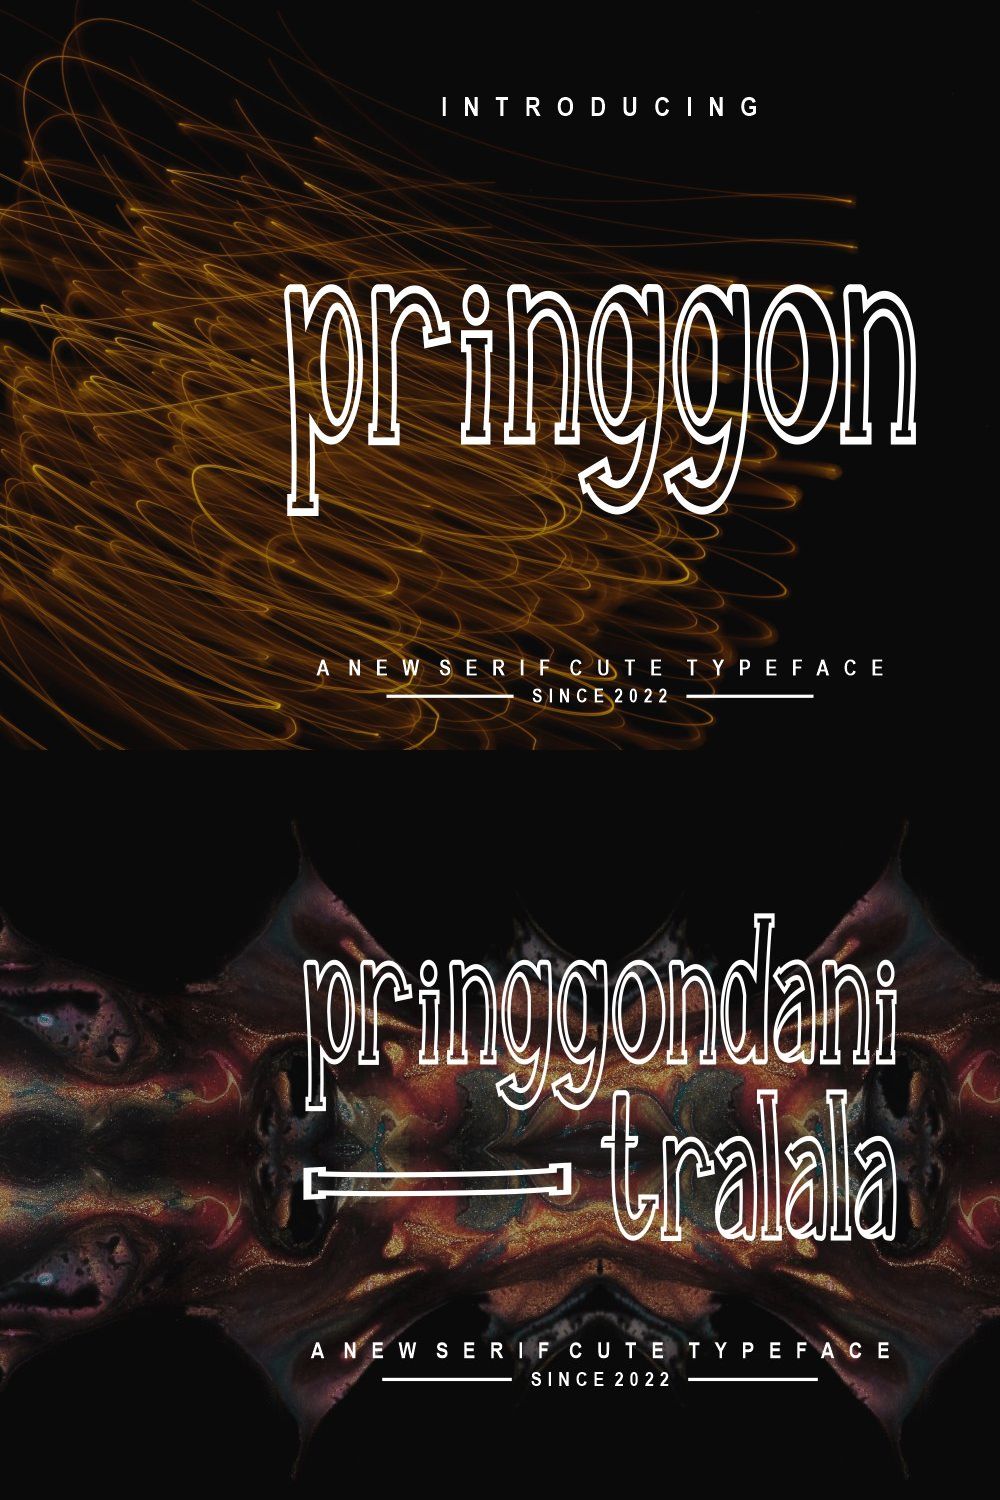 Pringgon pinterest preview image.